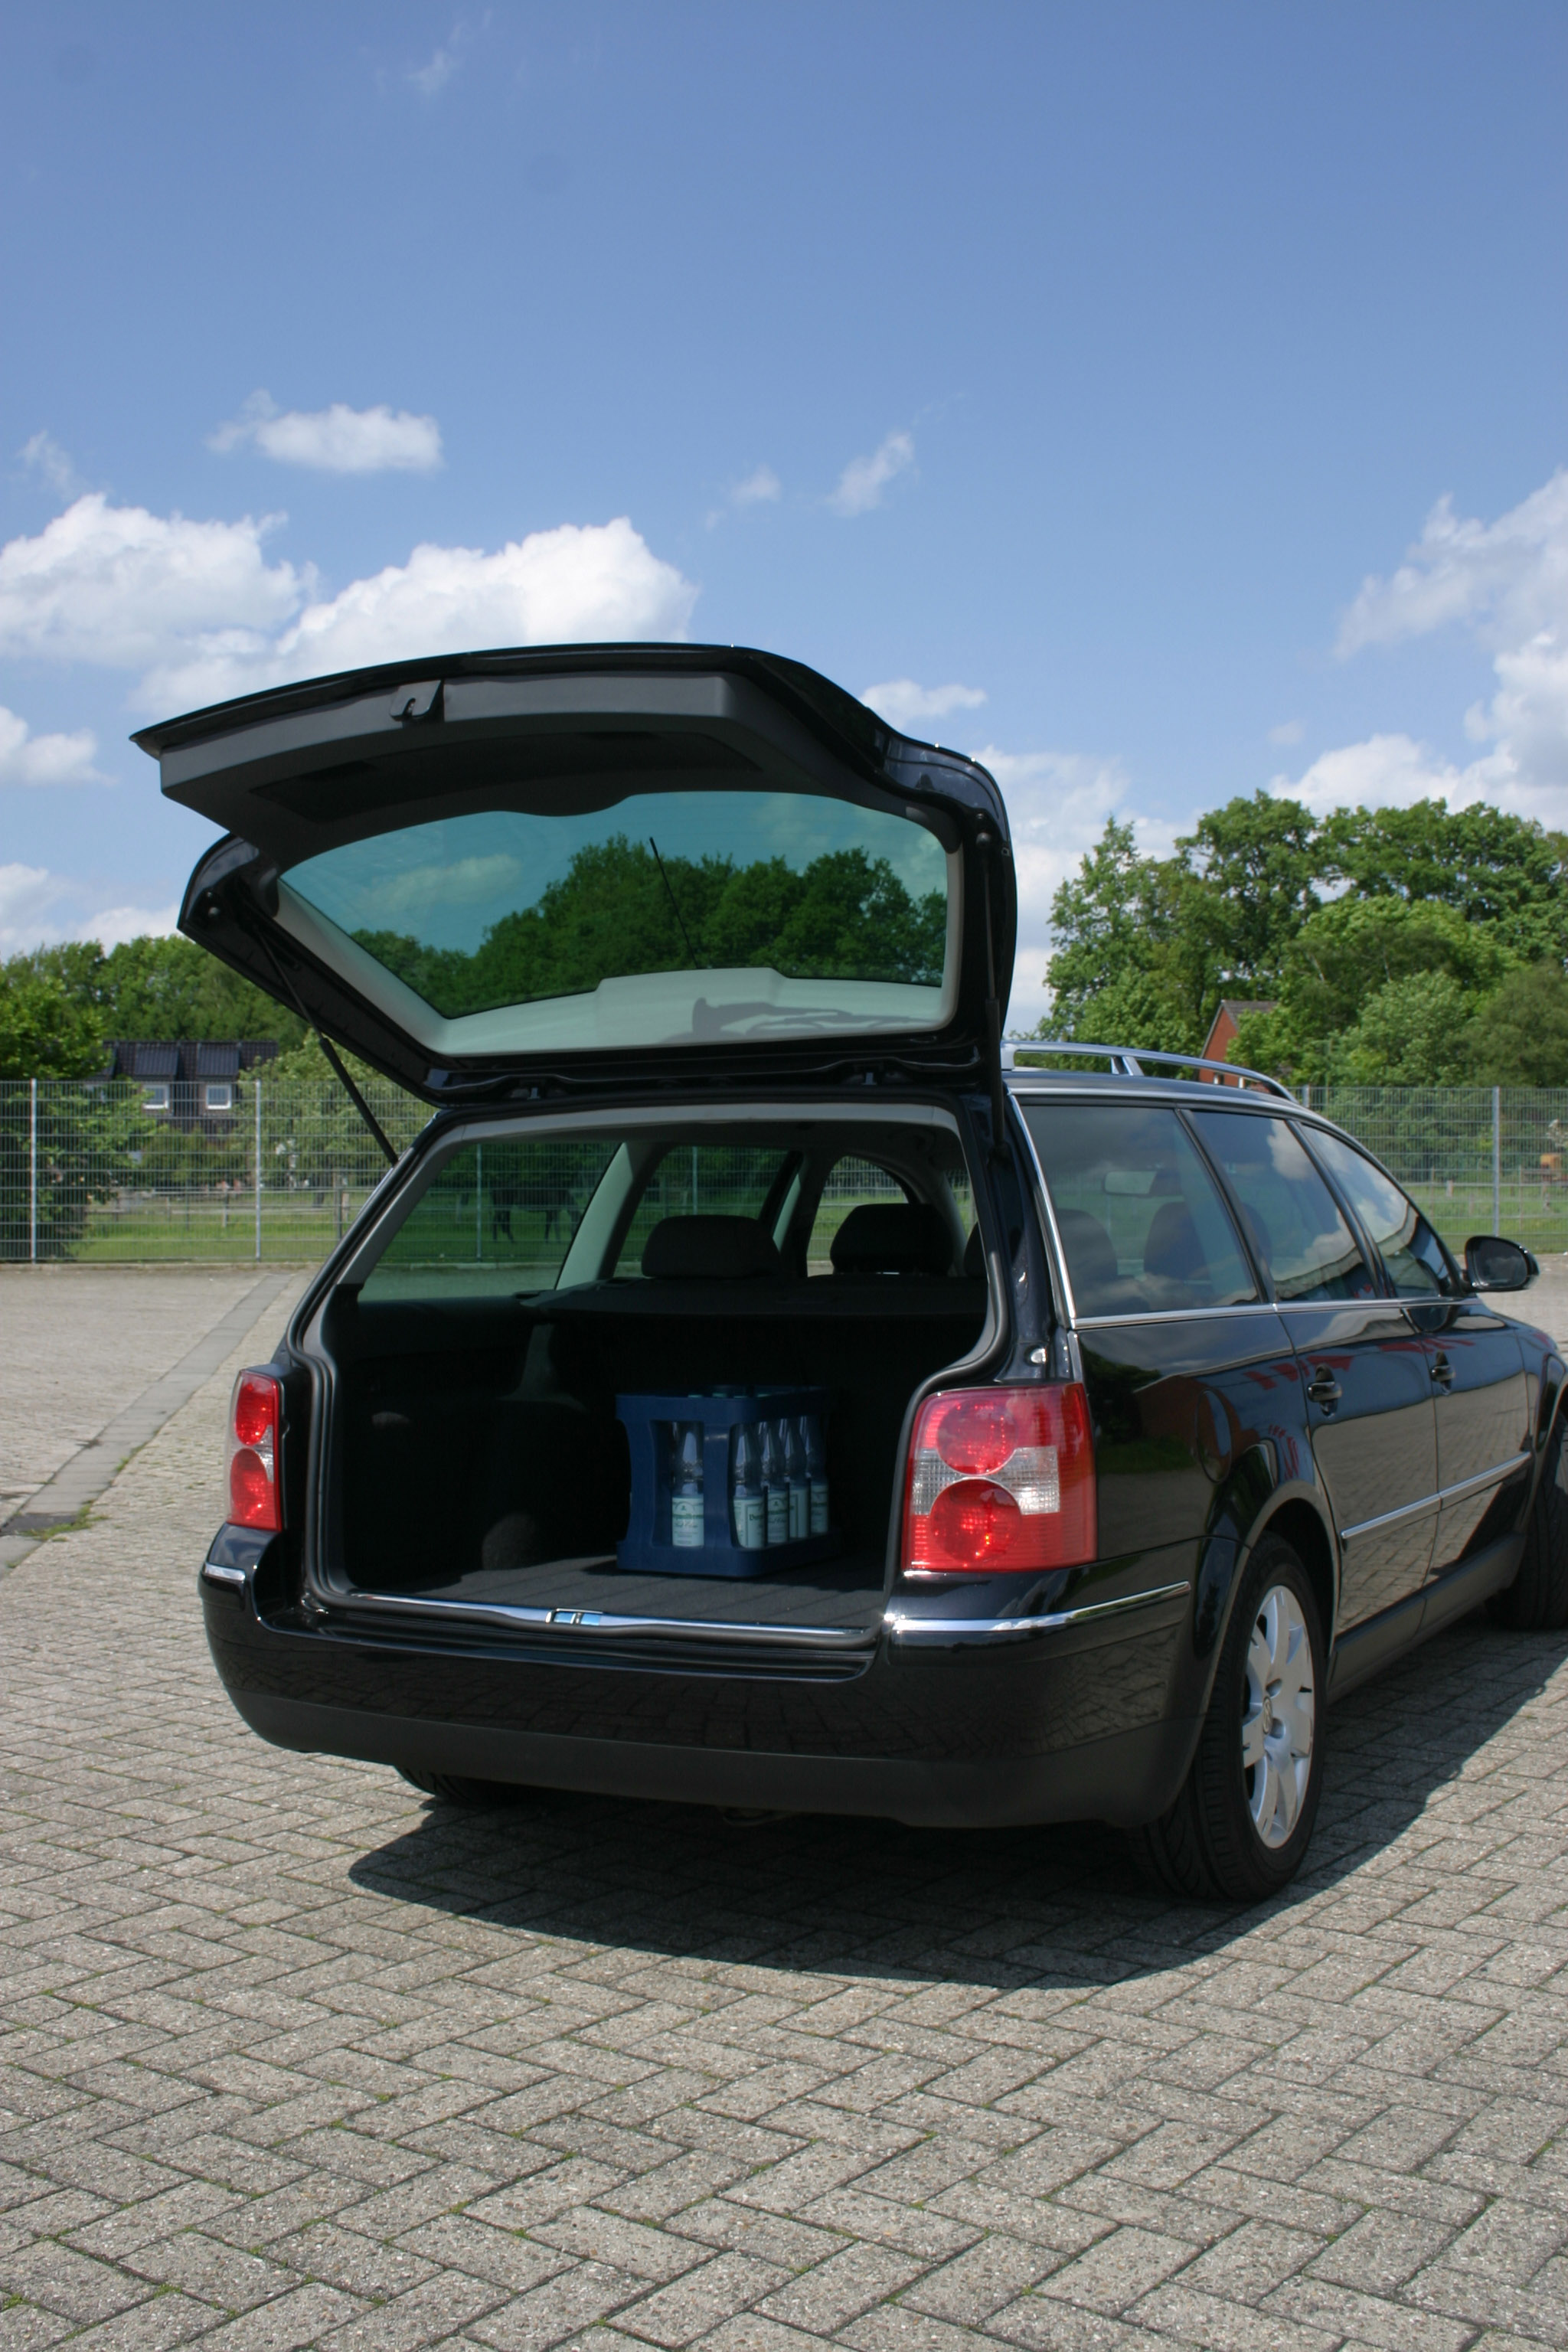 terug Doe herleven spel File:VW Passat Variant Typ B5GP Pic06 trunk.jpg - Wikipedia